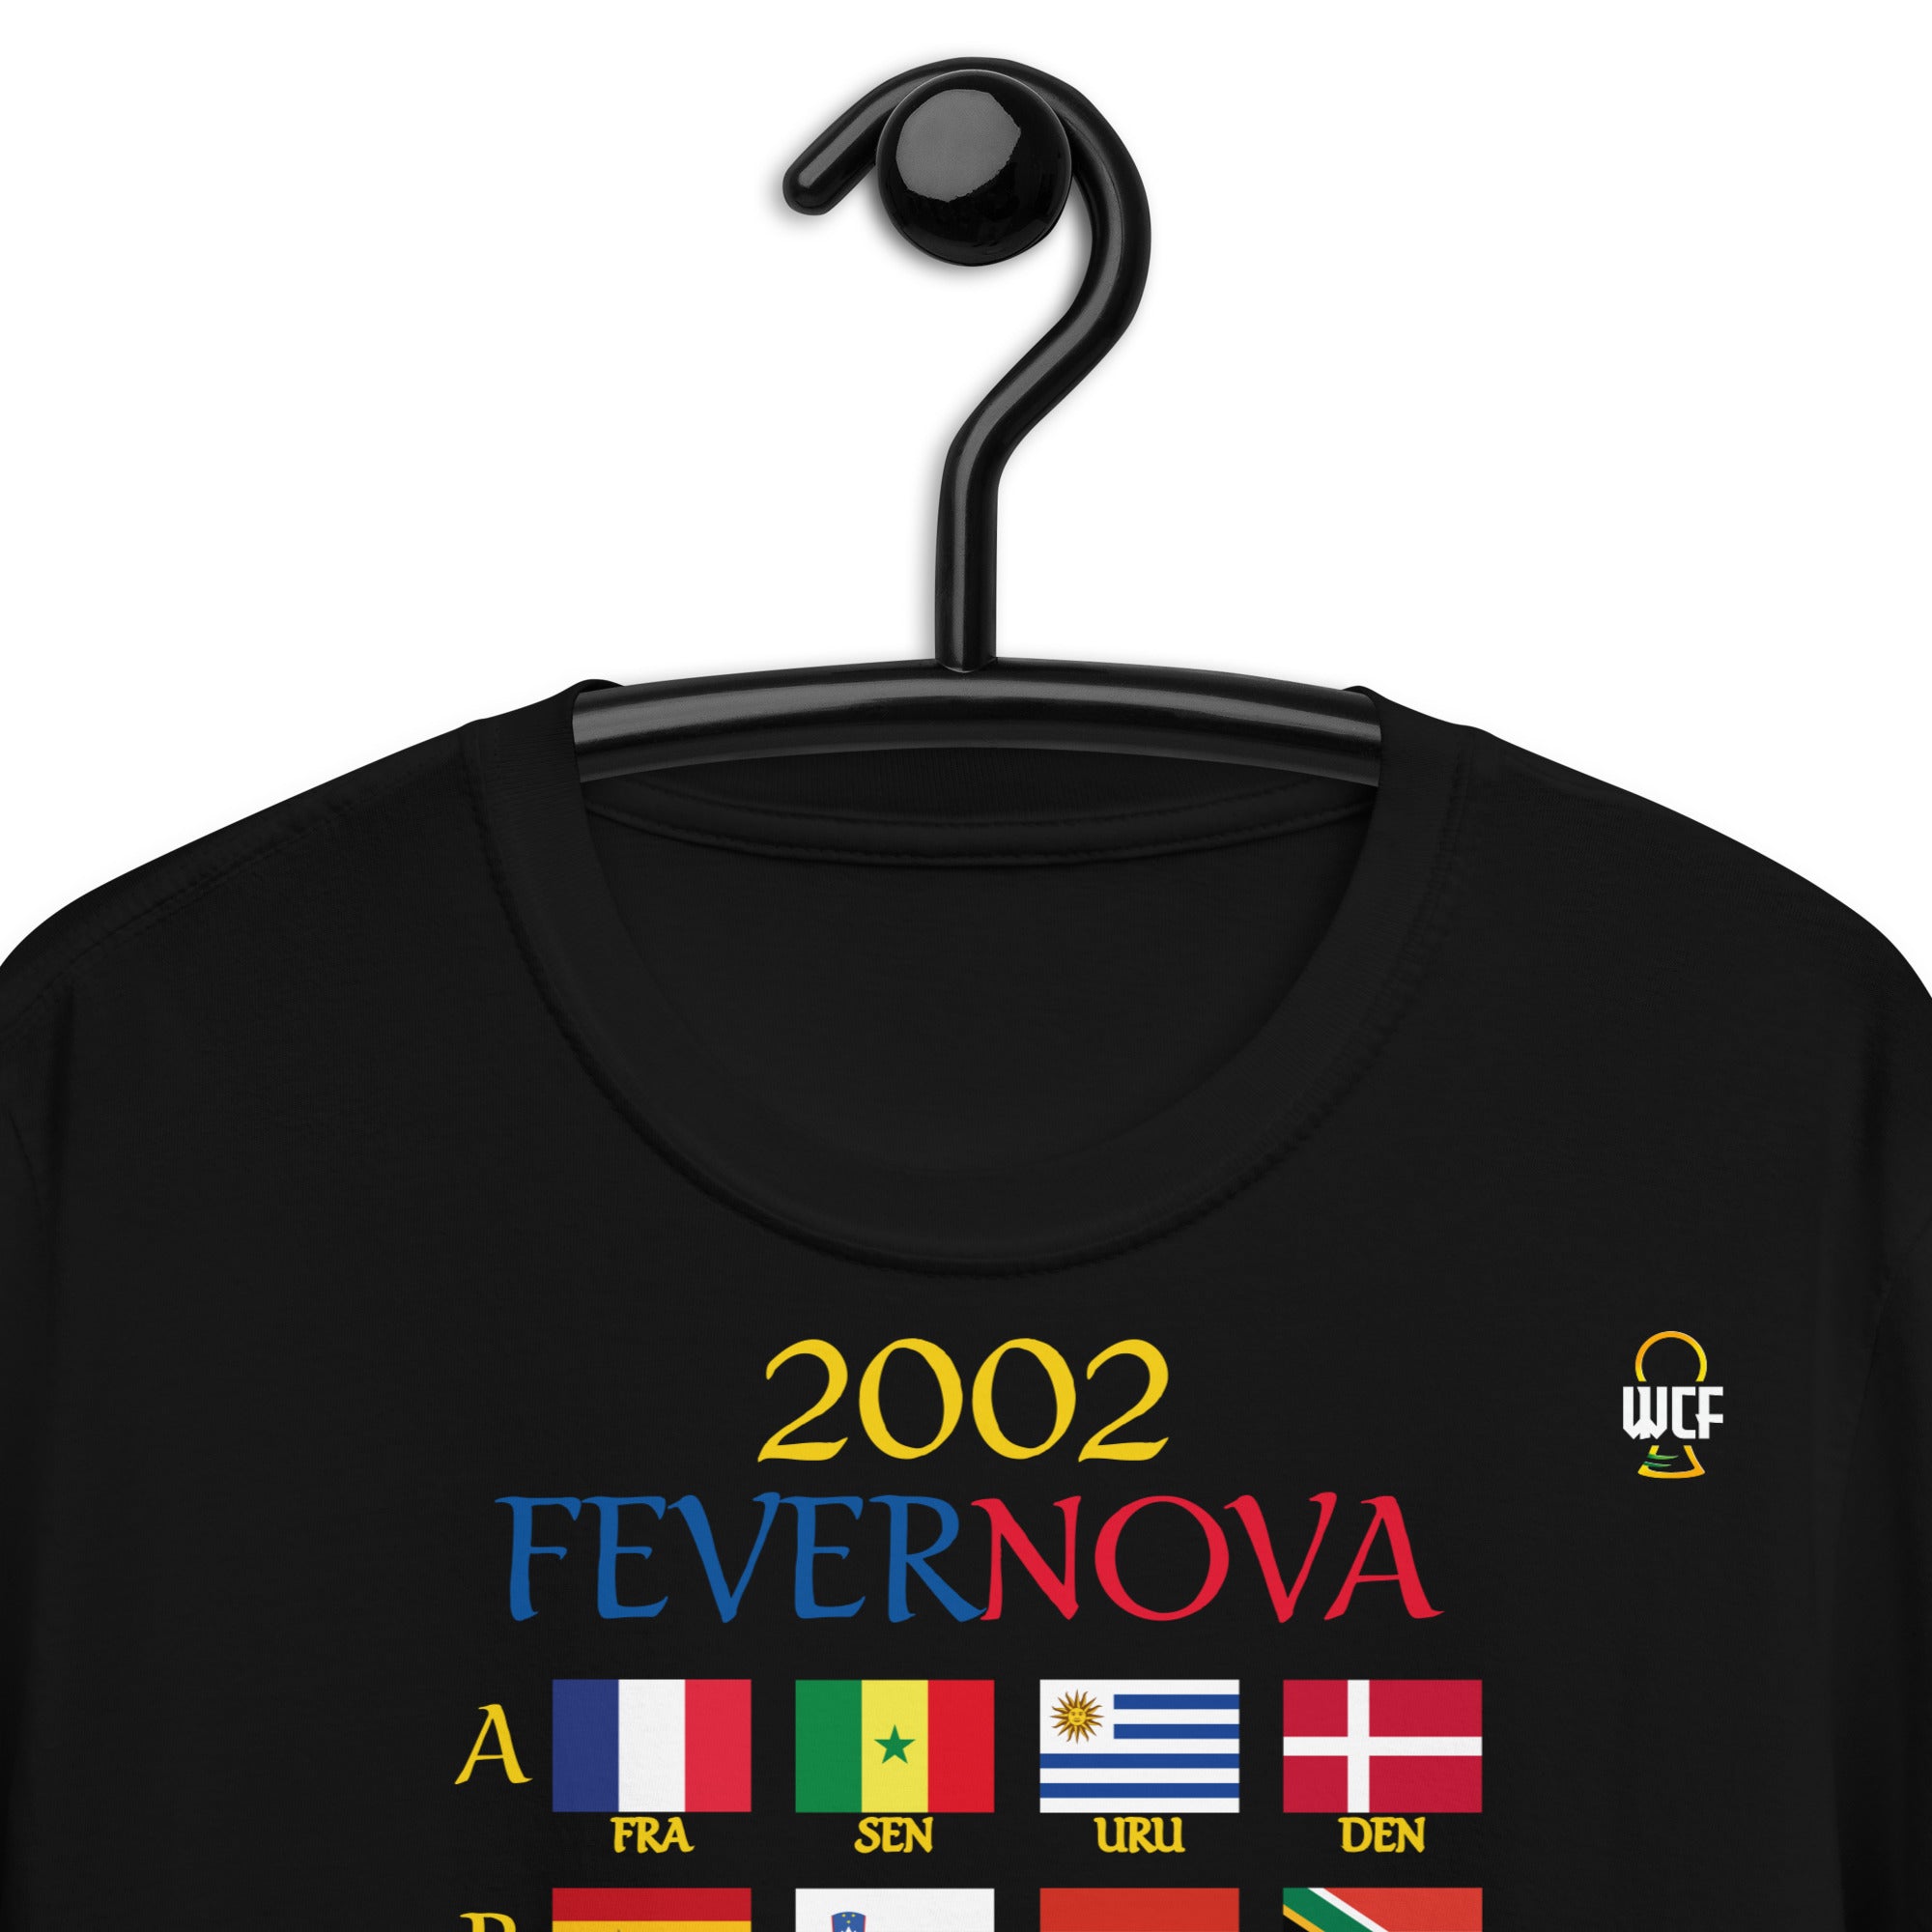 FIFA World Cup Korea Japan 2002 Softstyle T-Shirt - FEVERNOVA